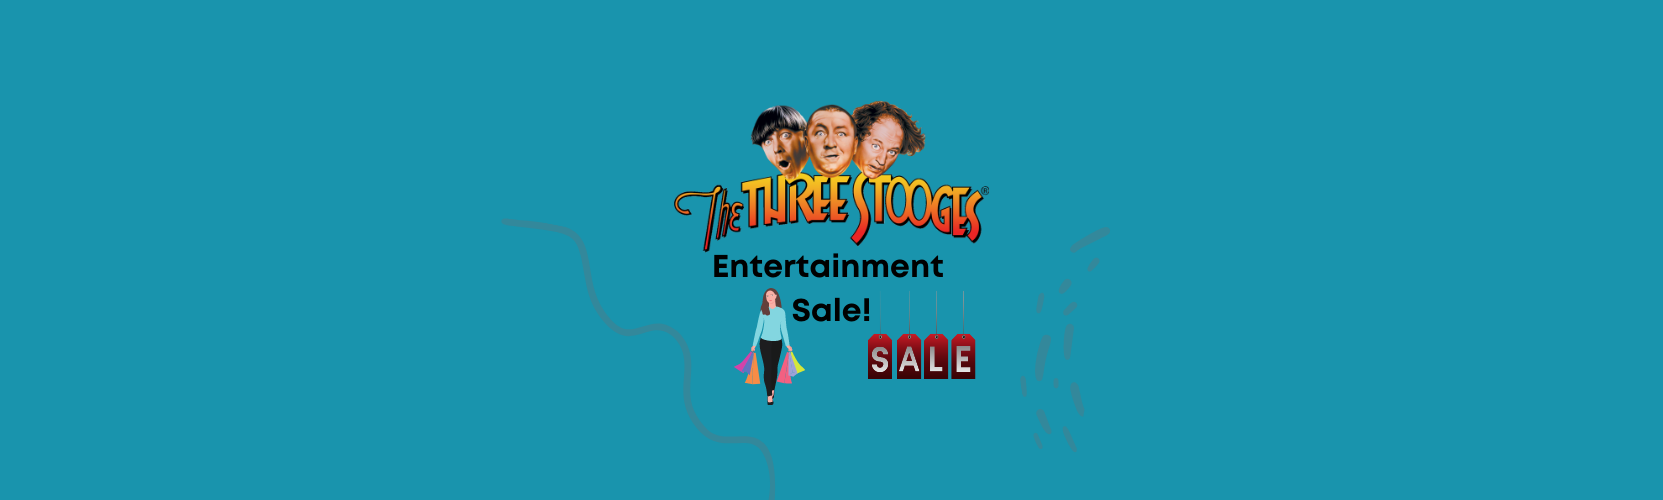 ShopKnuckleheads: Entertainment Sale!